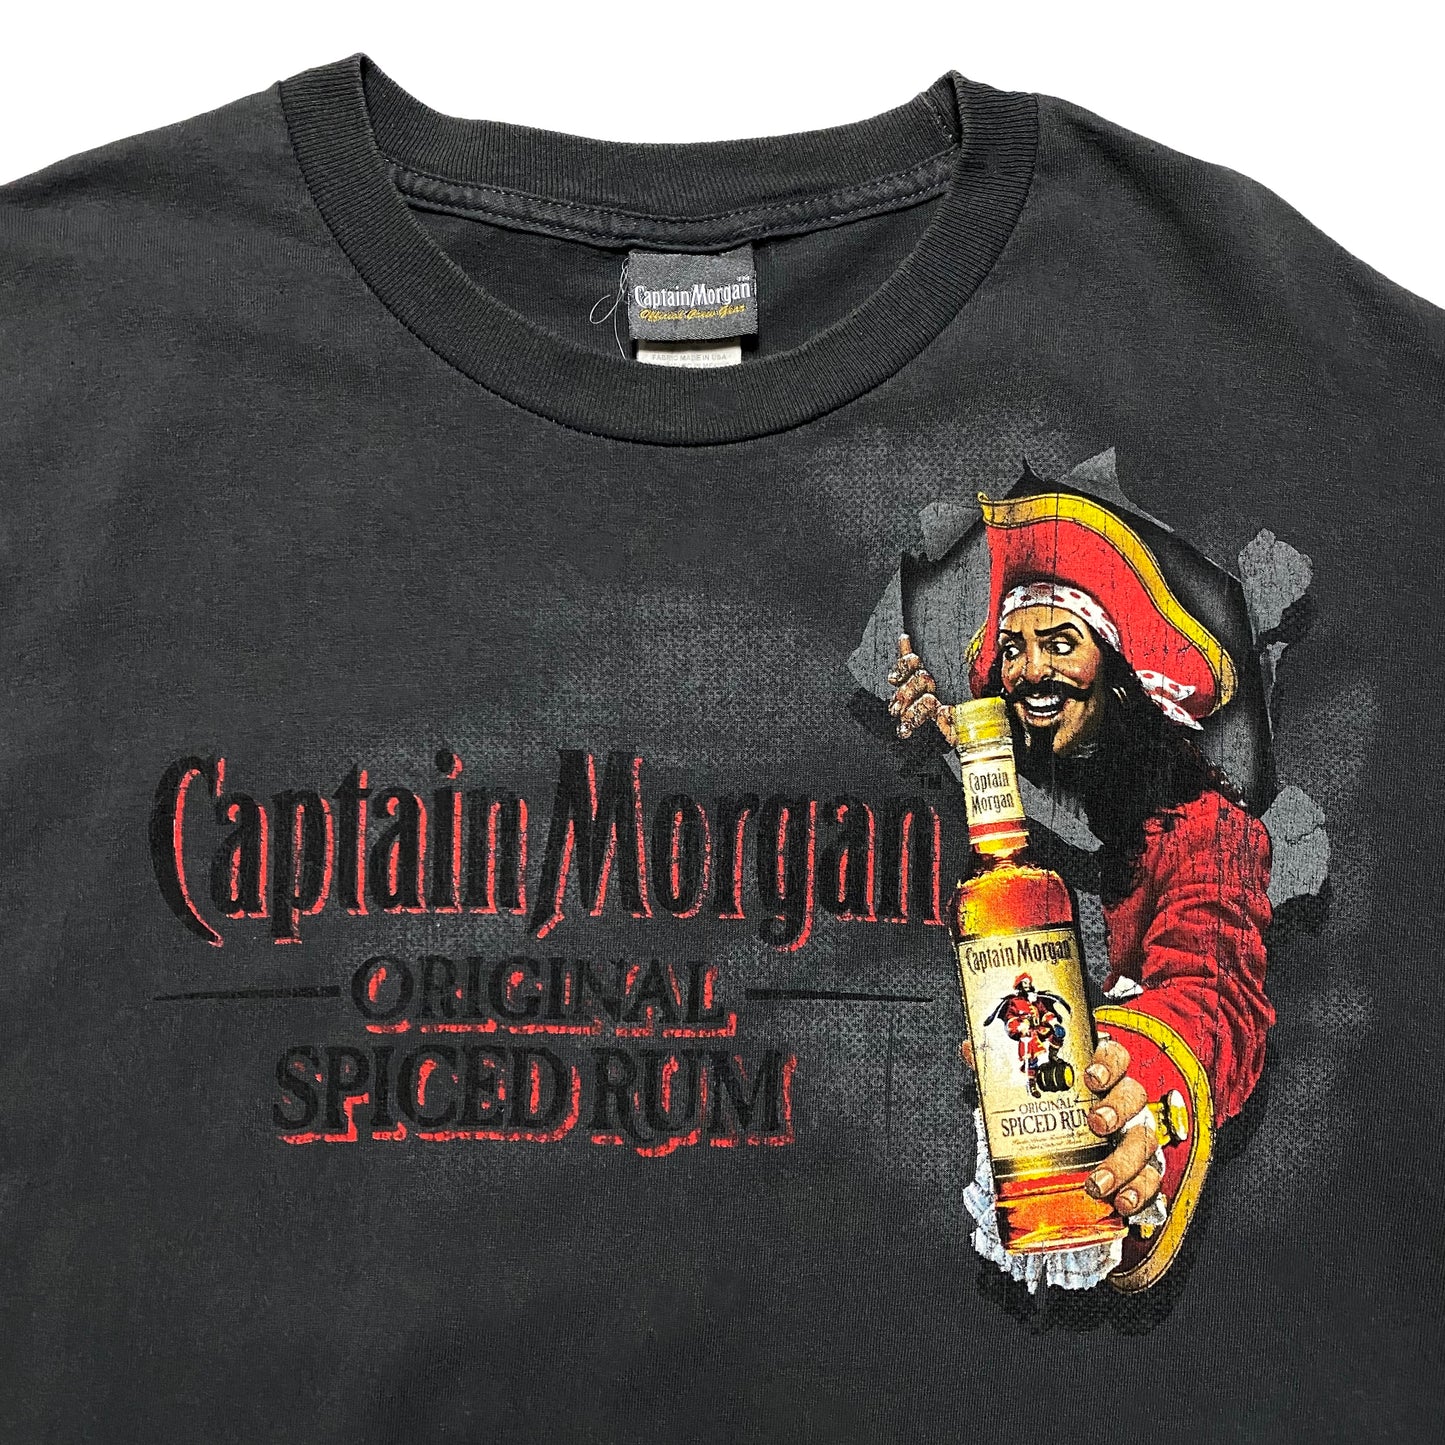 00's "Captain Morgan" T-SHIRT